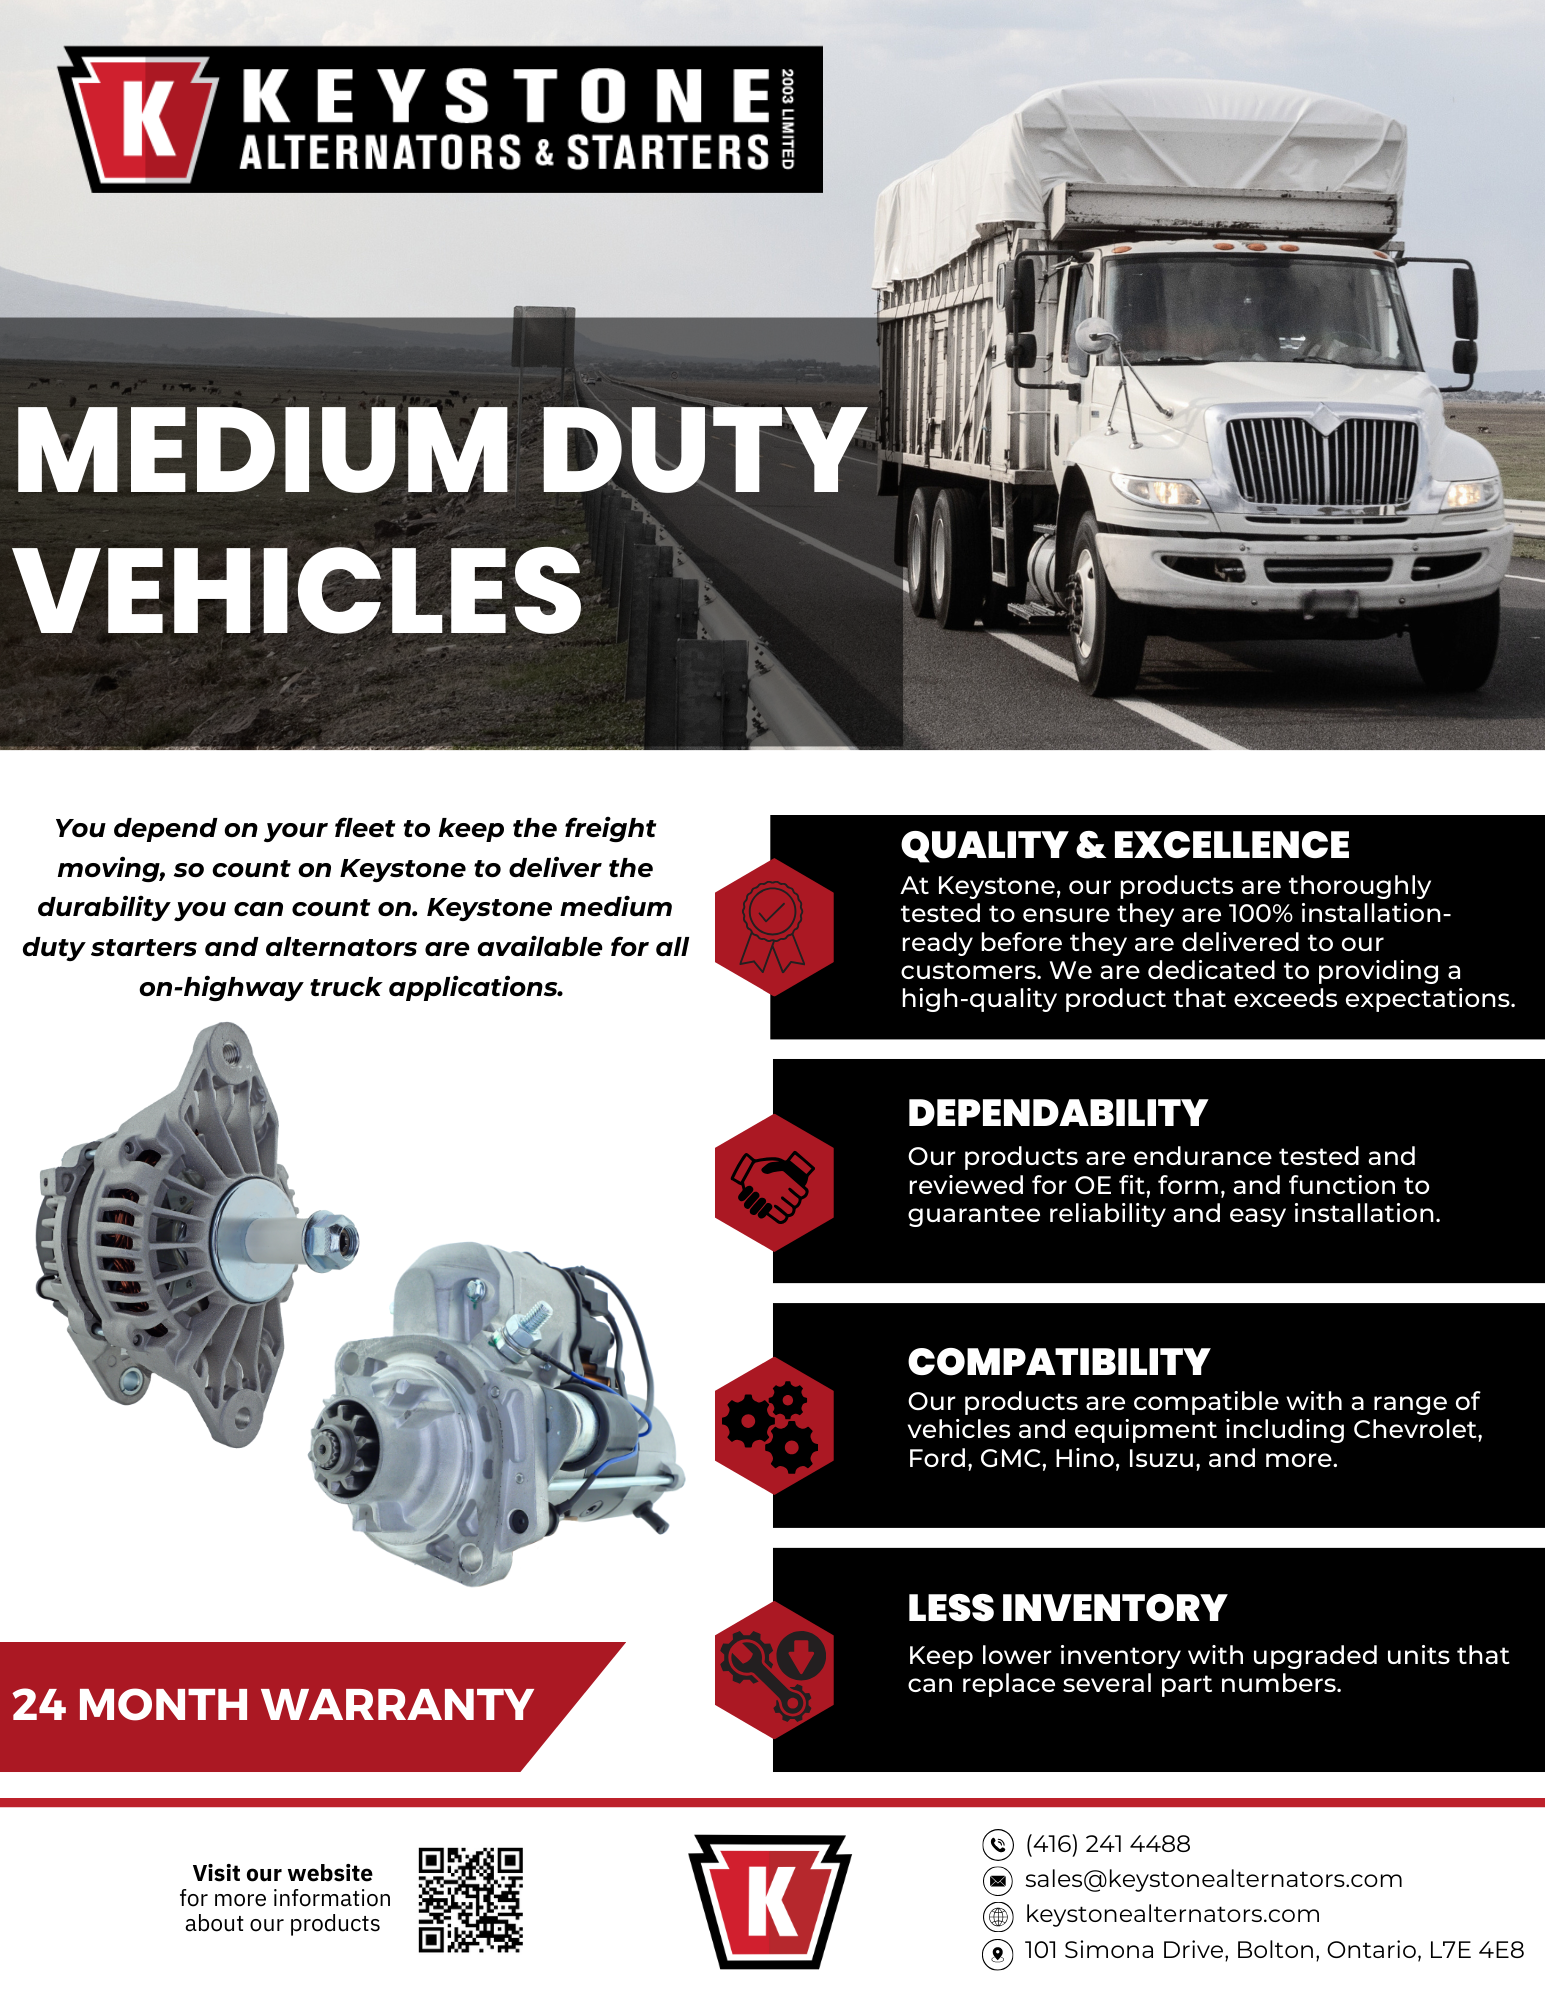 Medium duty trucks alternators and starters Keystone